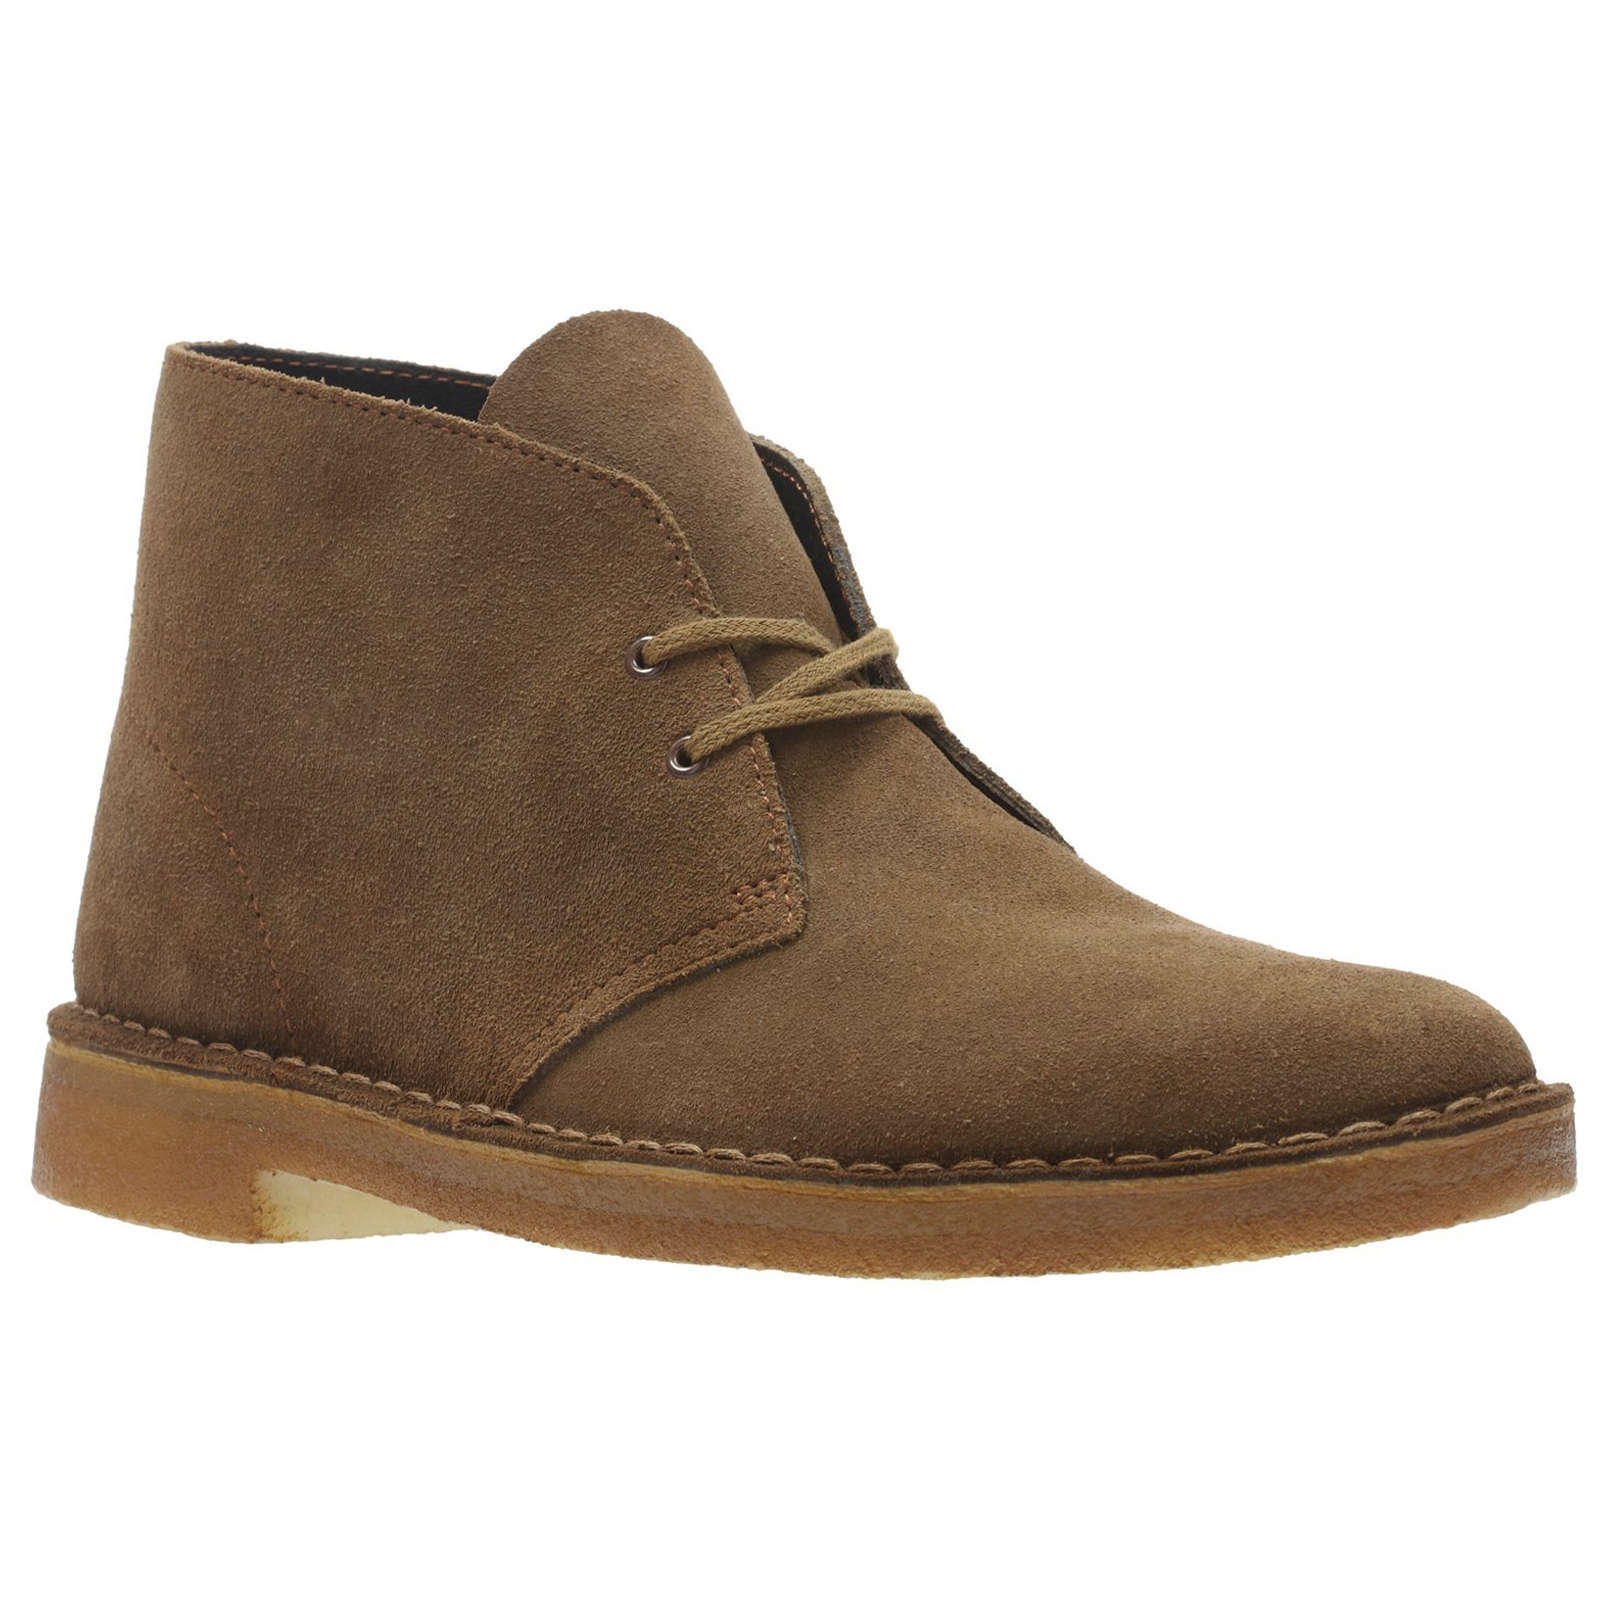 Clarks Originals Desert Boot Suede Leather Men's Boots#color_cola brown